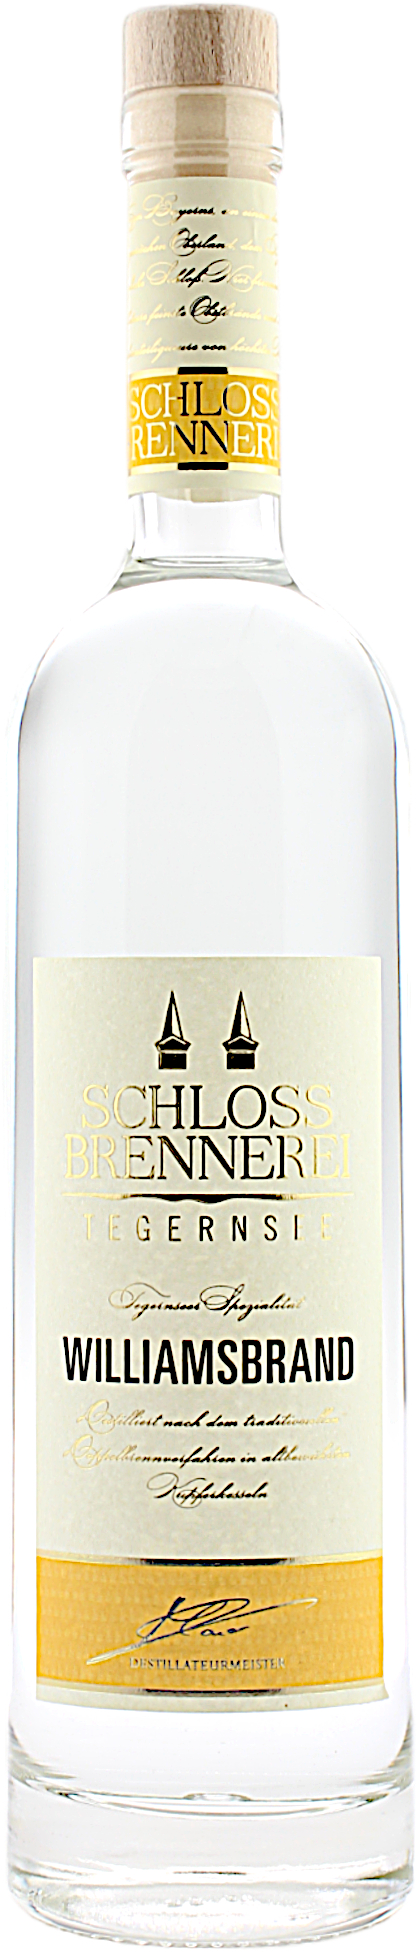 Schlossbrennerei Tegernsee Williamsbrand 40.0% 0,7l